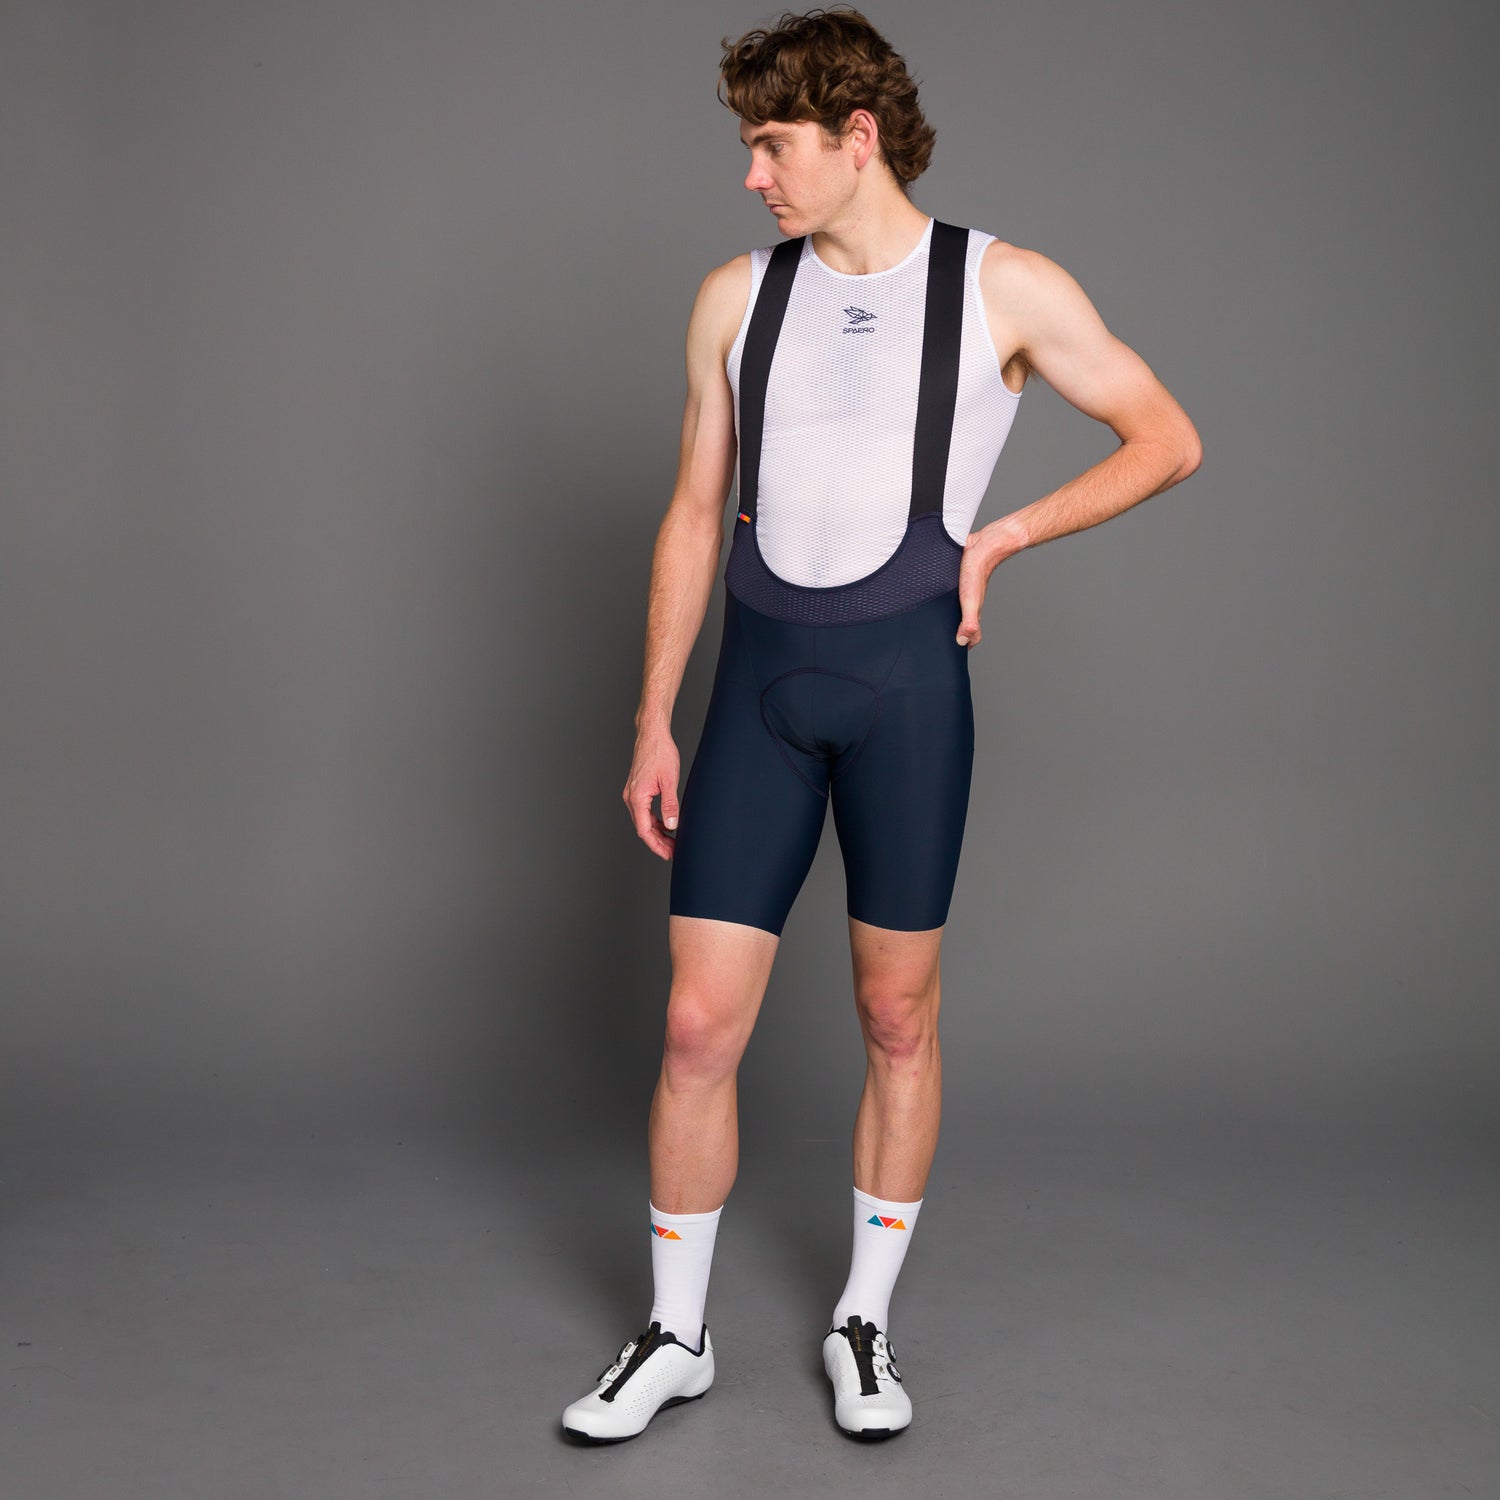 Men's Cycling Bib Shorts